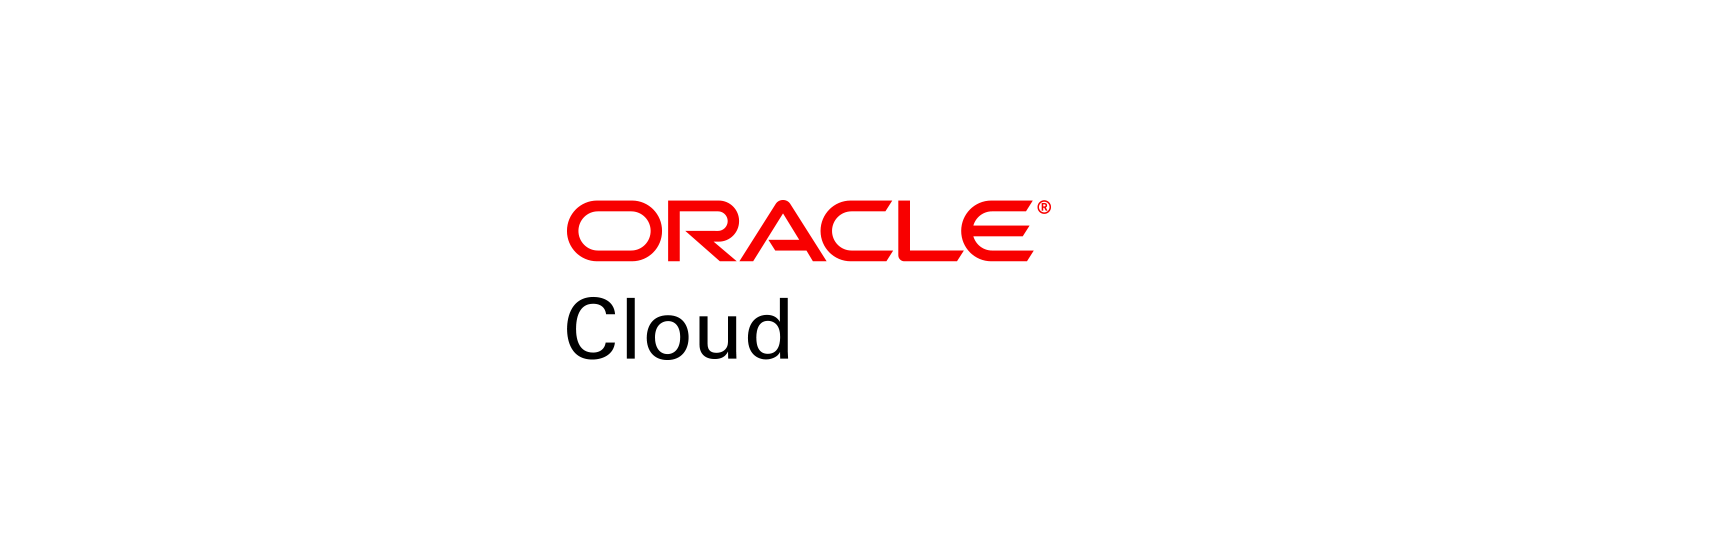 Oracle Corporation Logo - Oracle Brand | Logos